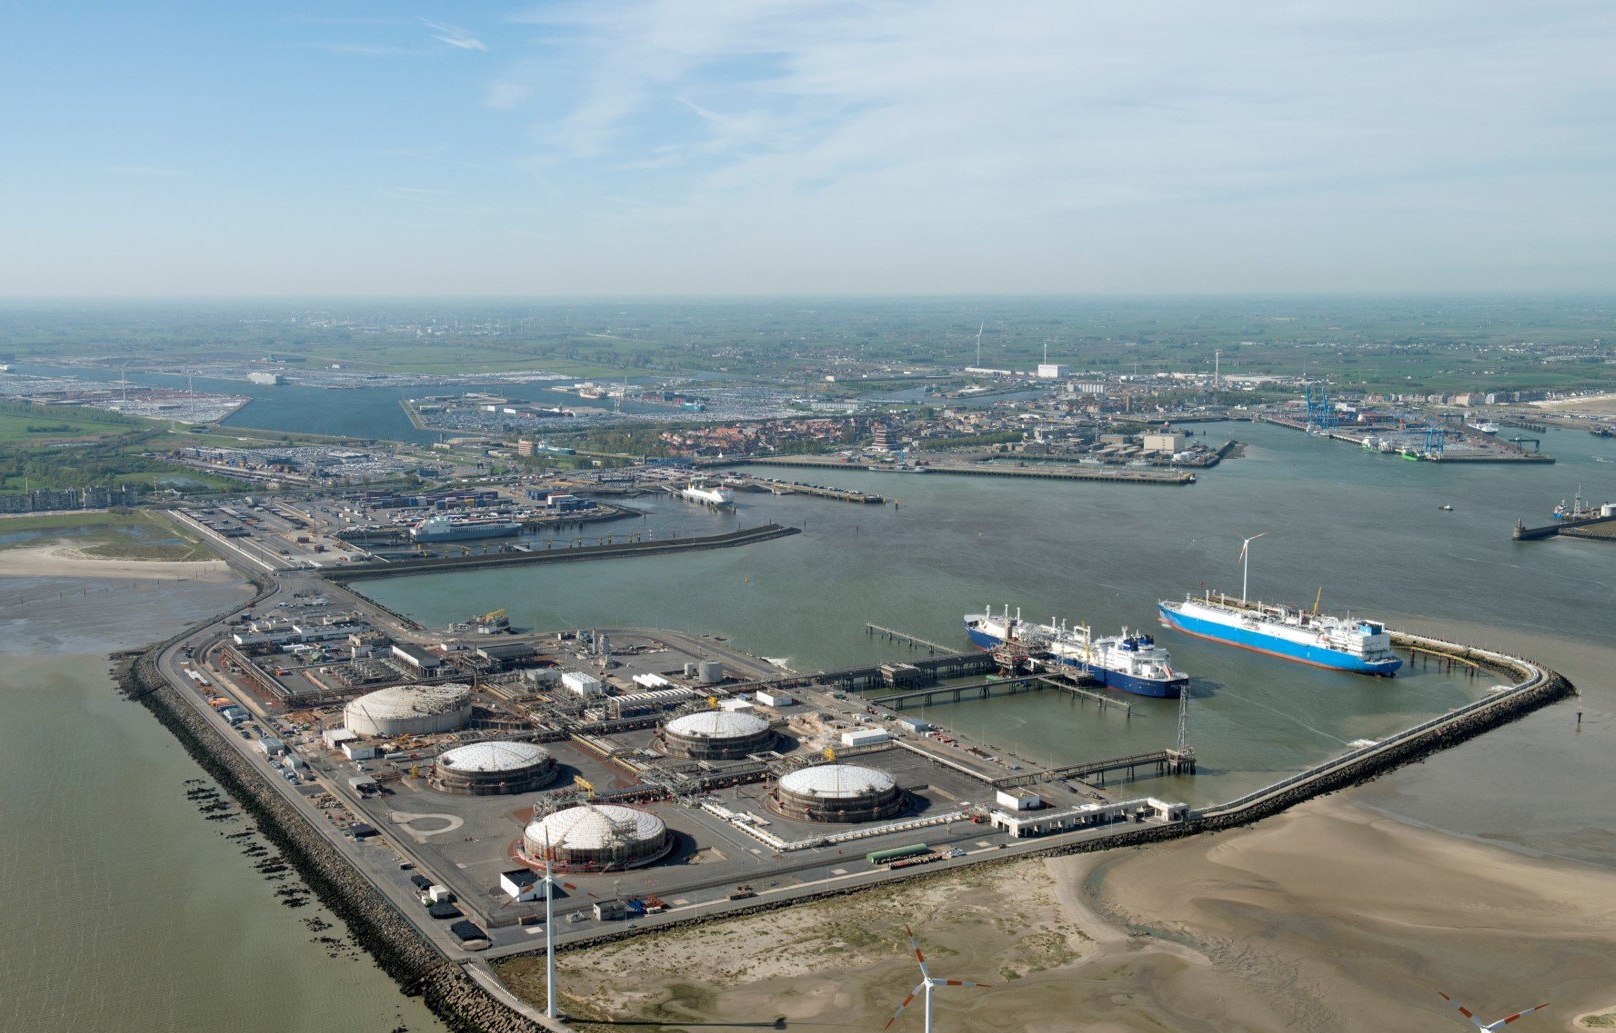 Fluxys: Zeebrugge LNG activity soars in 2018